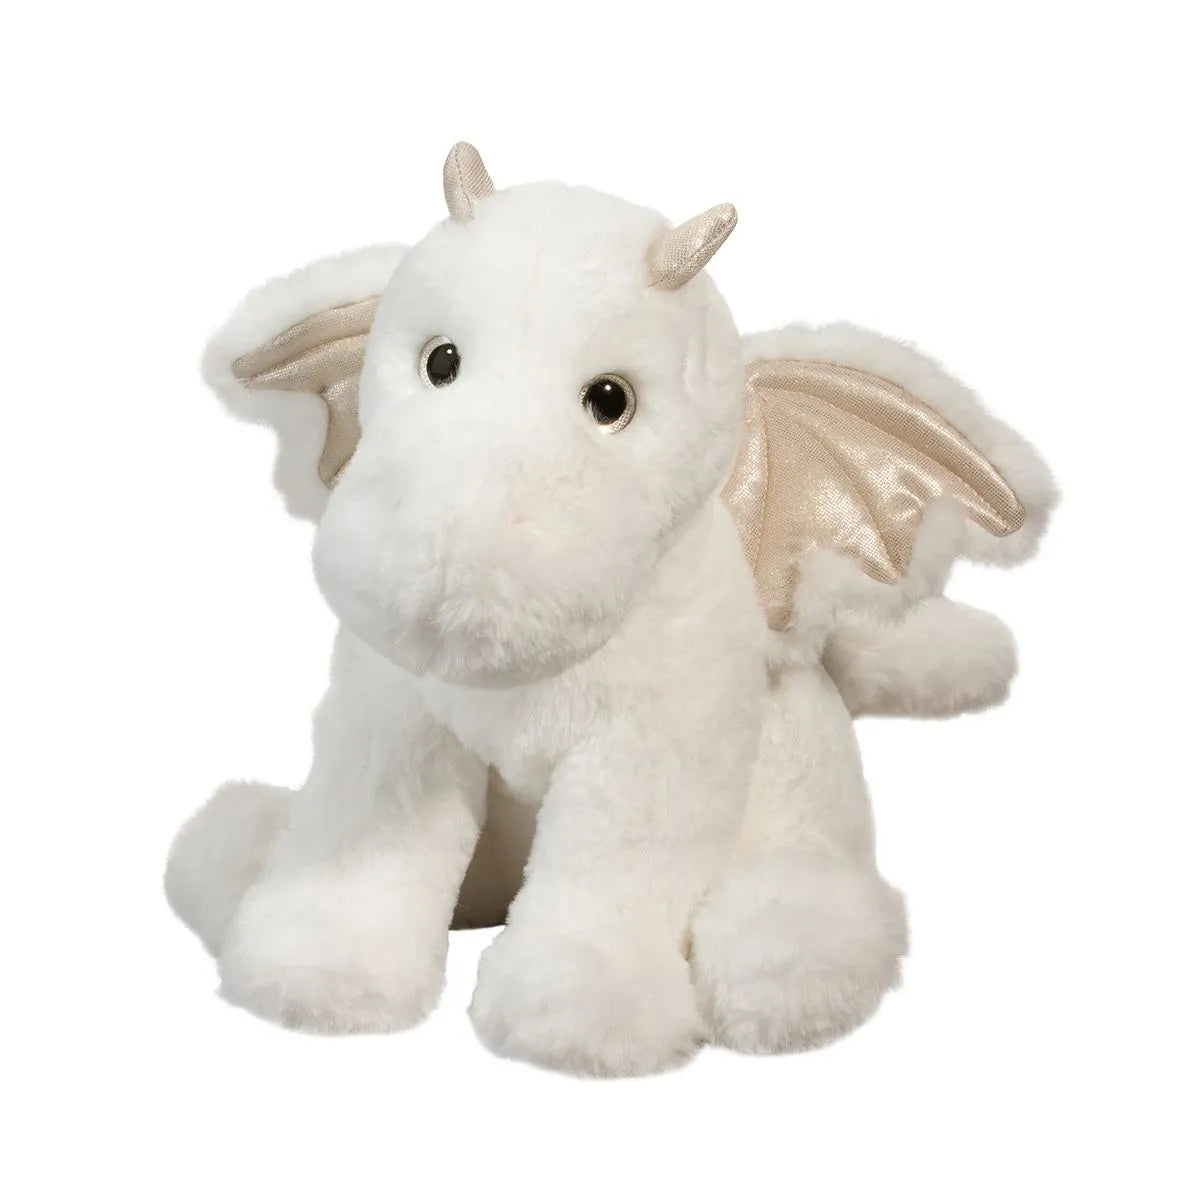 Stuffed Animal - Lukie White Dragon